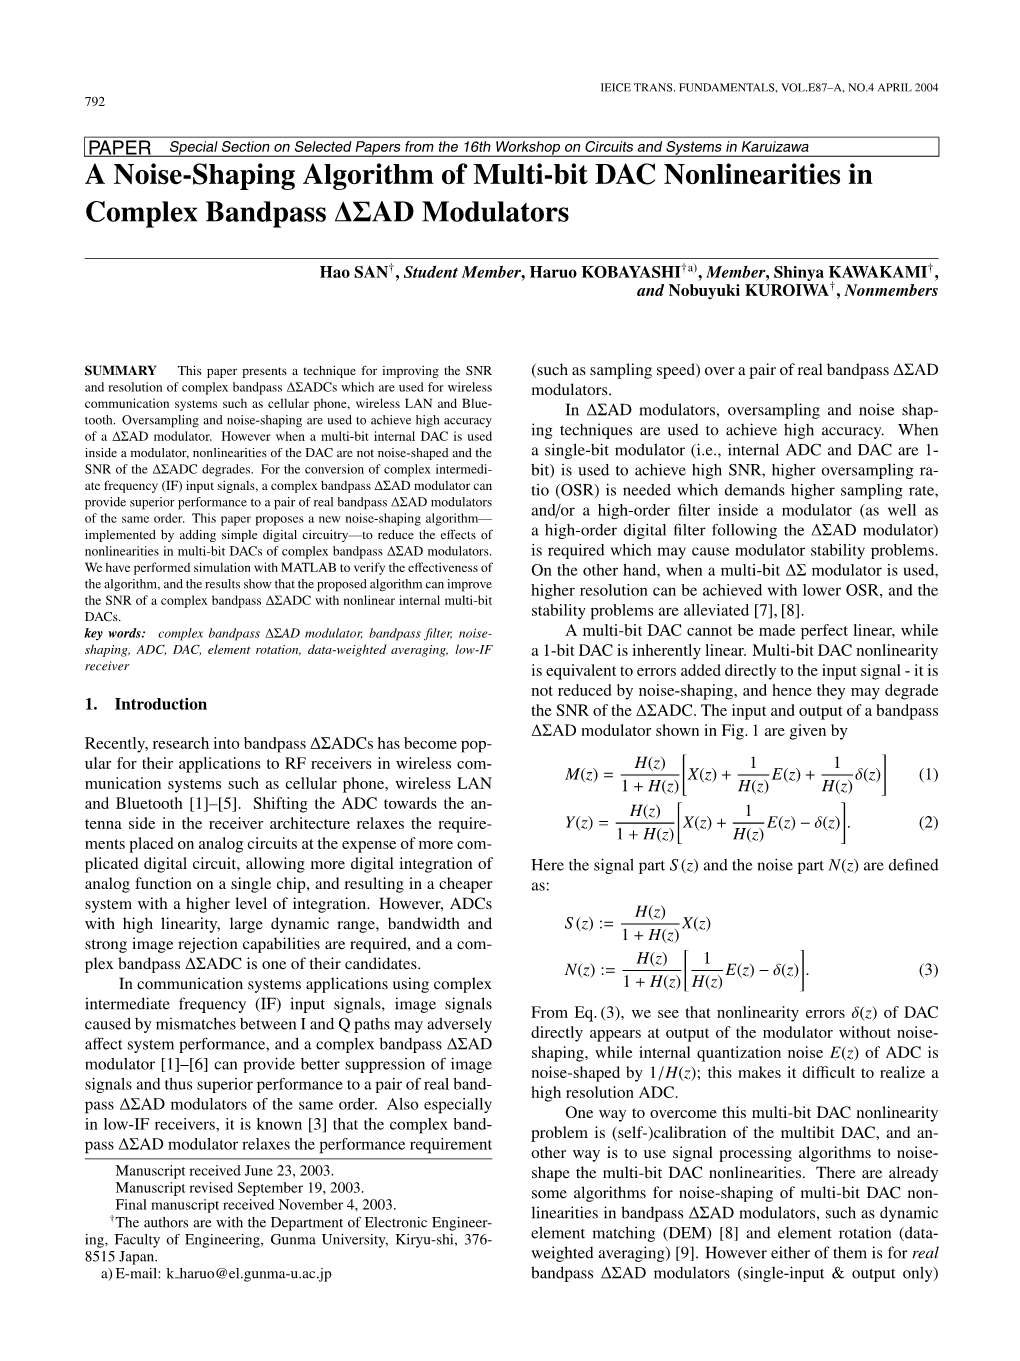 A Noise-Shaping Algorithm of Multi-Bit DAC Nonlinearities in Complex Bandpass ∆ΣAD Modulators